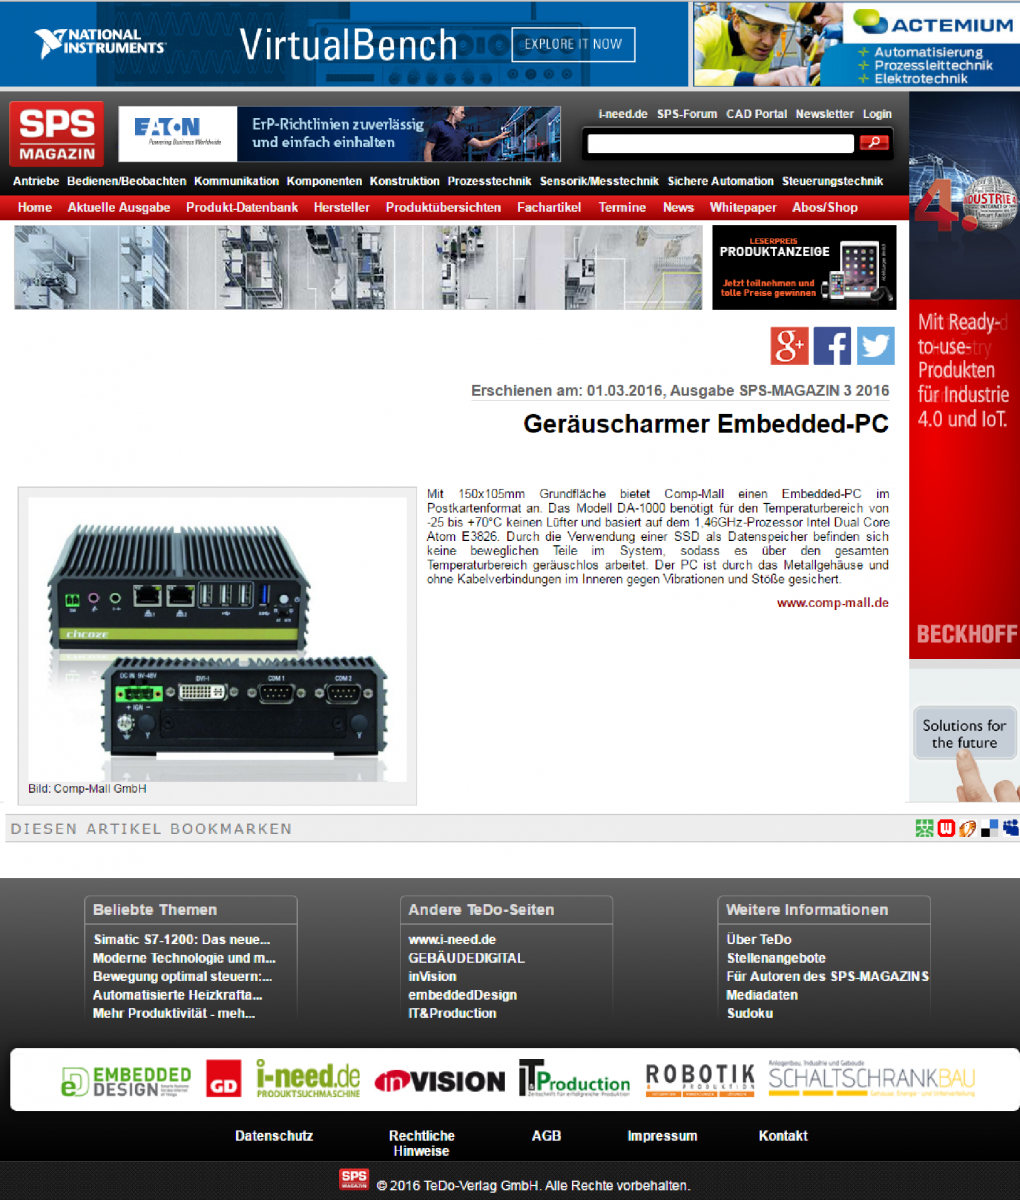 SPS Magazine (Germany) Introduces Cincoze New DA-1000 Embedded PC